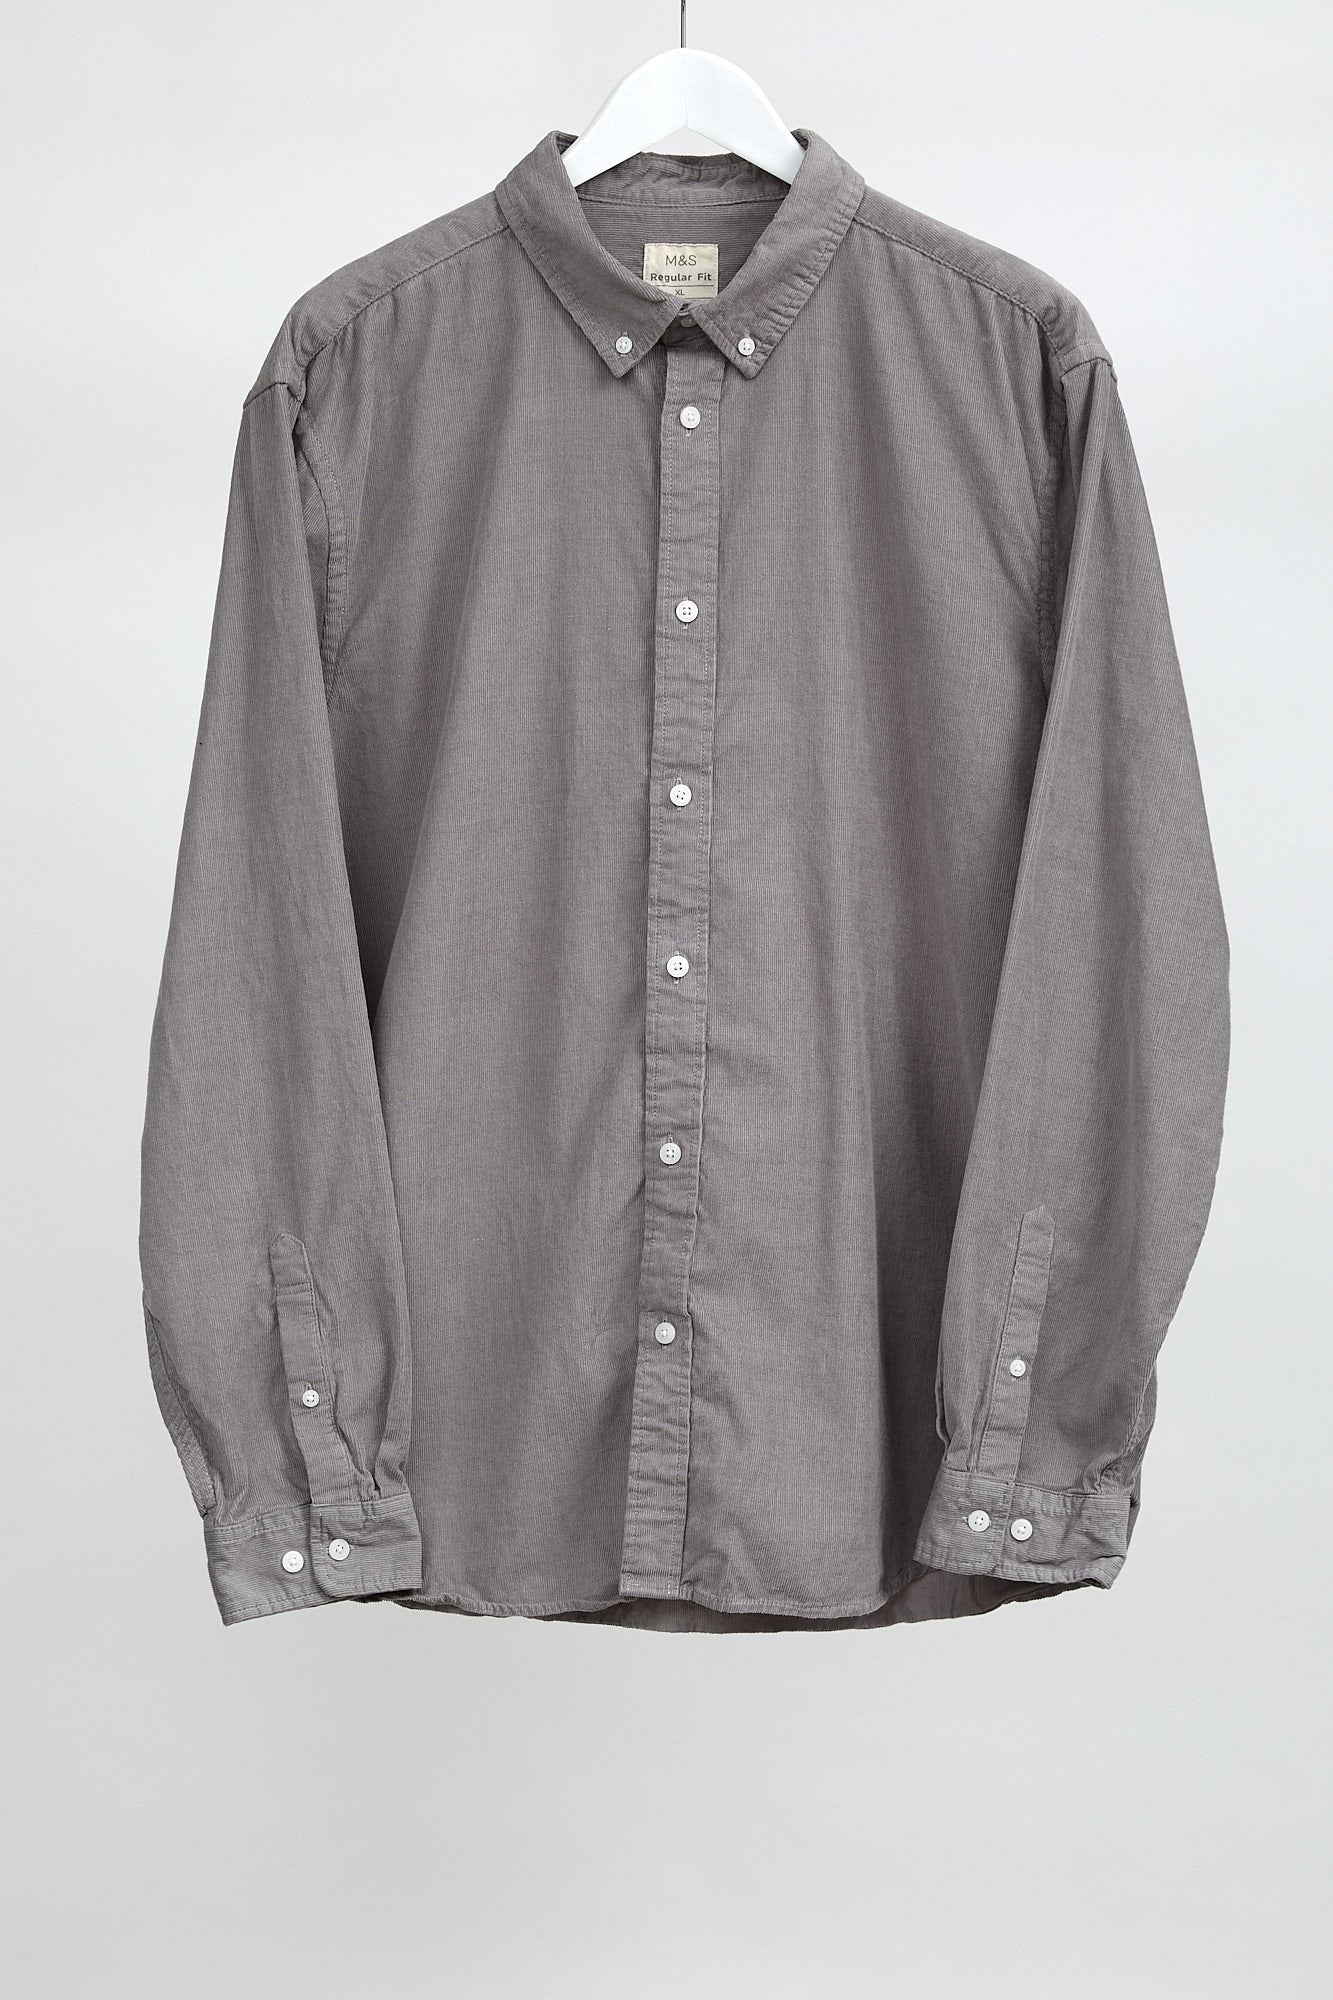 Mens M&S Grey Corduroy Shirt: Size Extra Large